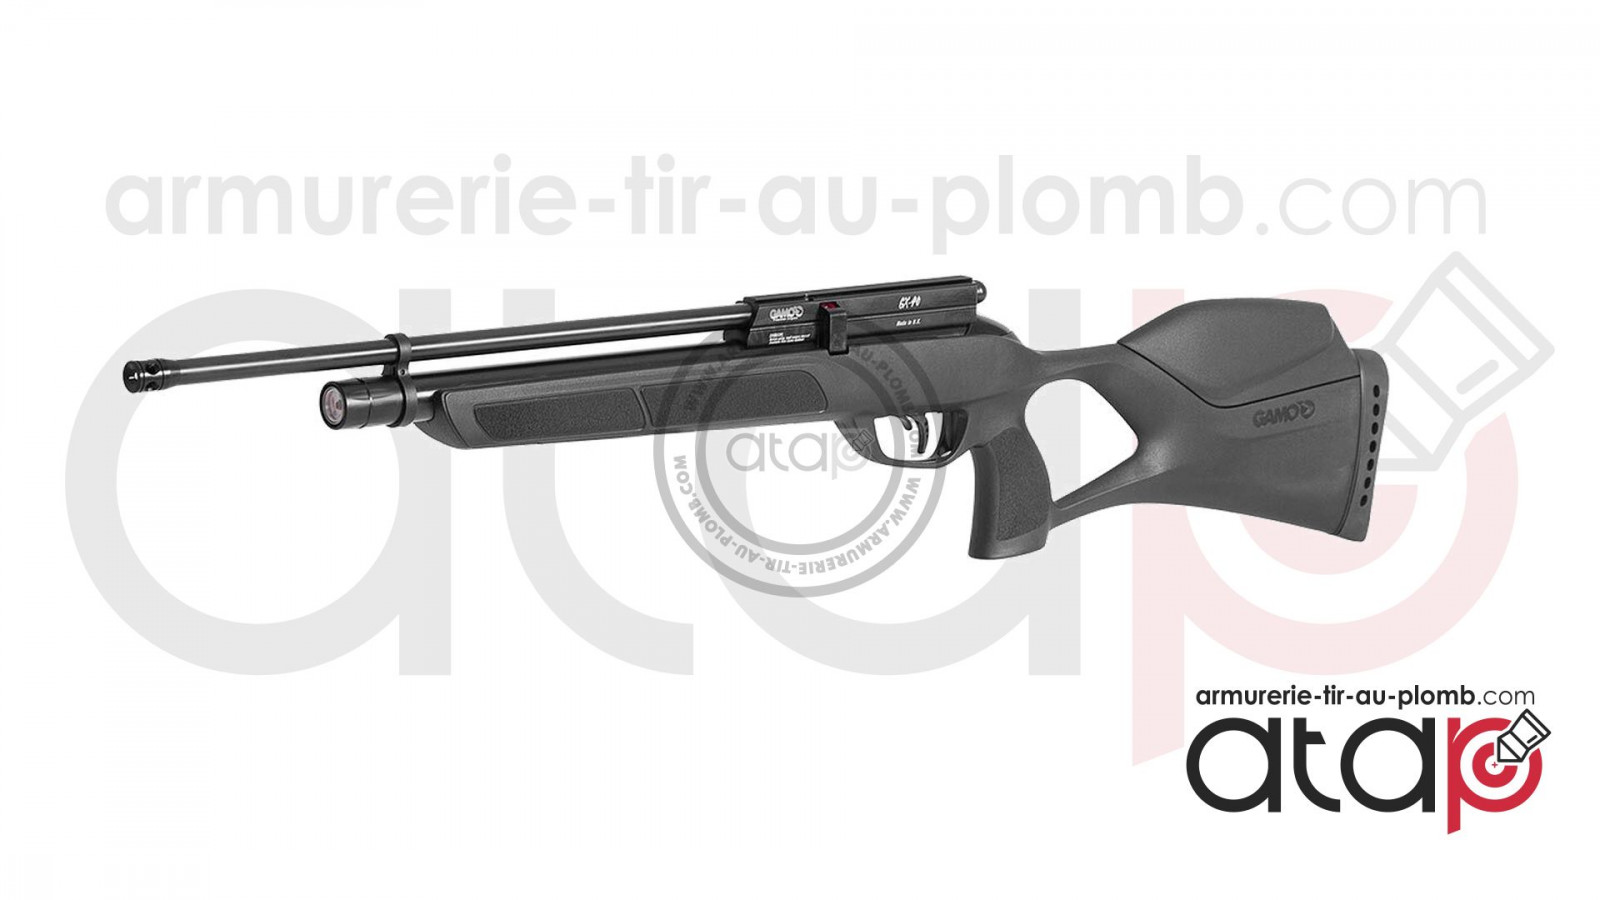 Gamo GX 40 - Carabine PCP 40 Joules 5.5 mm